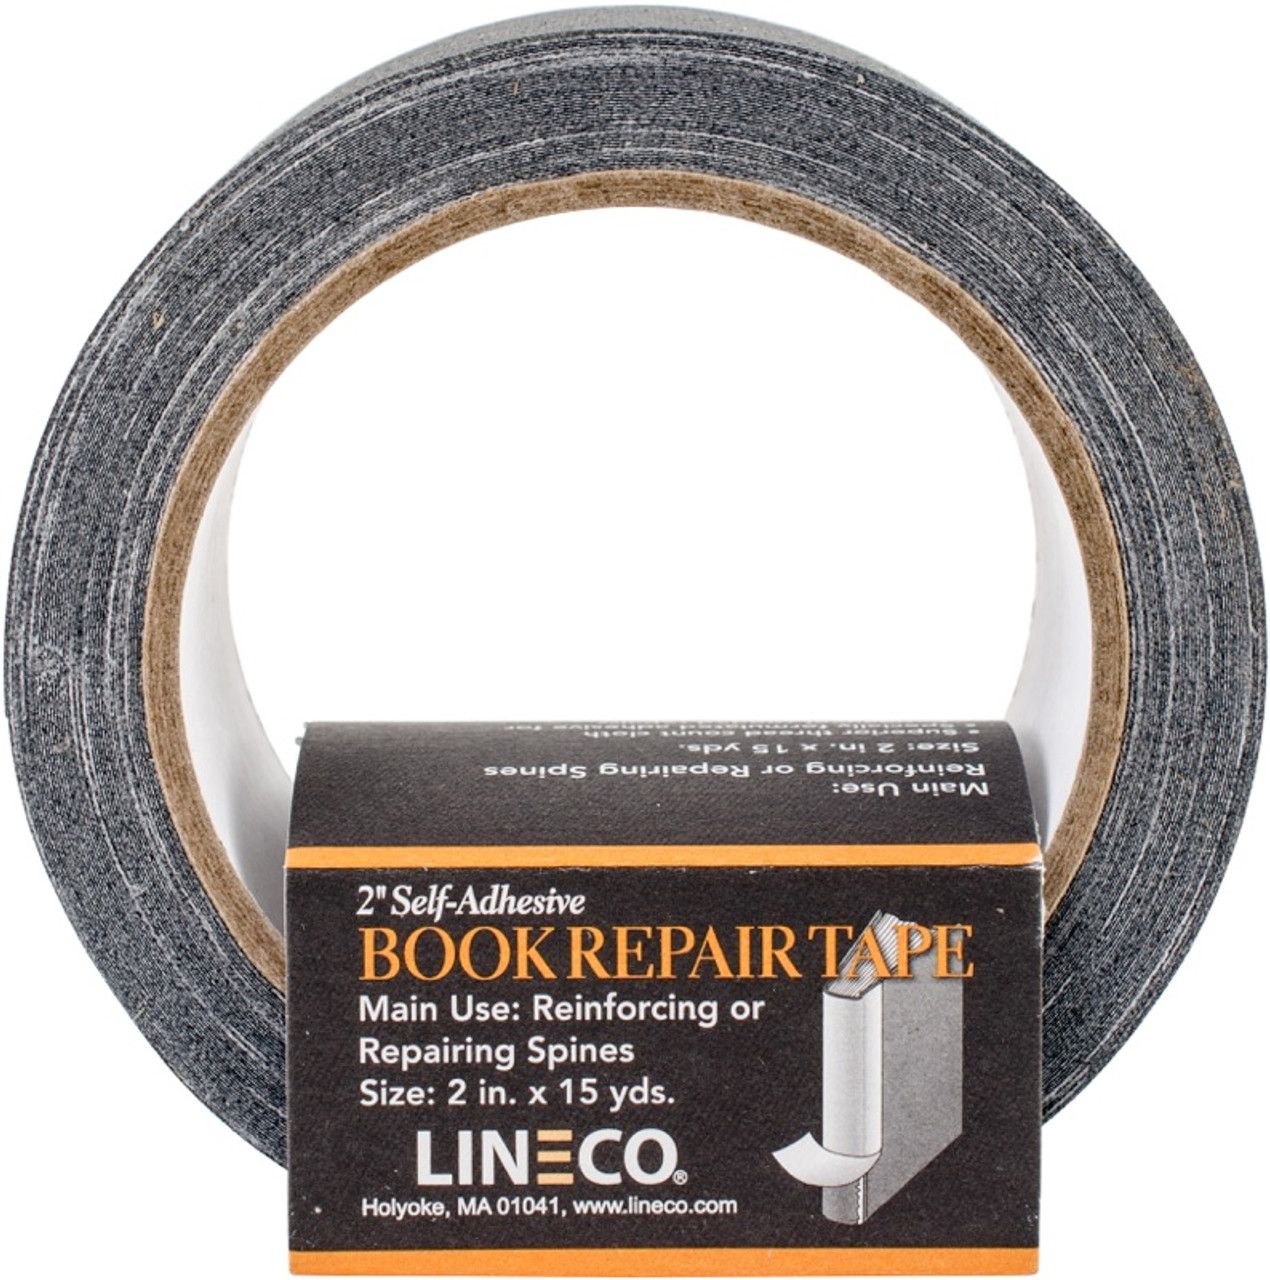 Lineco Self Adhesive Linen Hinging Tape, 1.25 x 35', White Linen